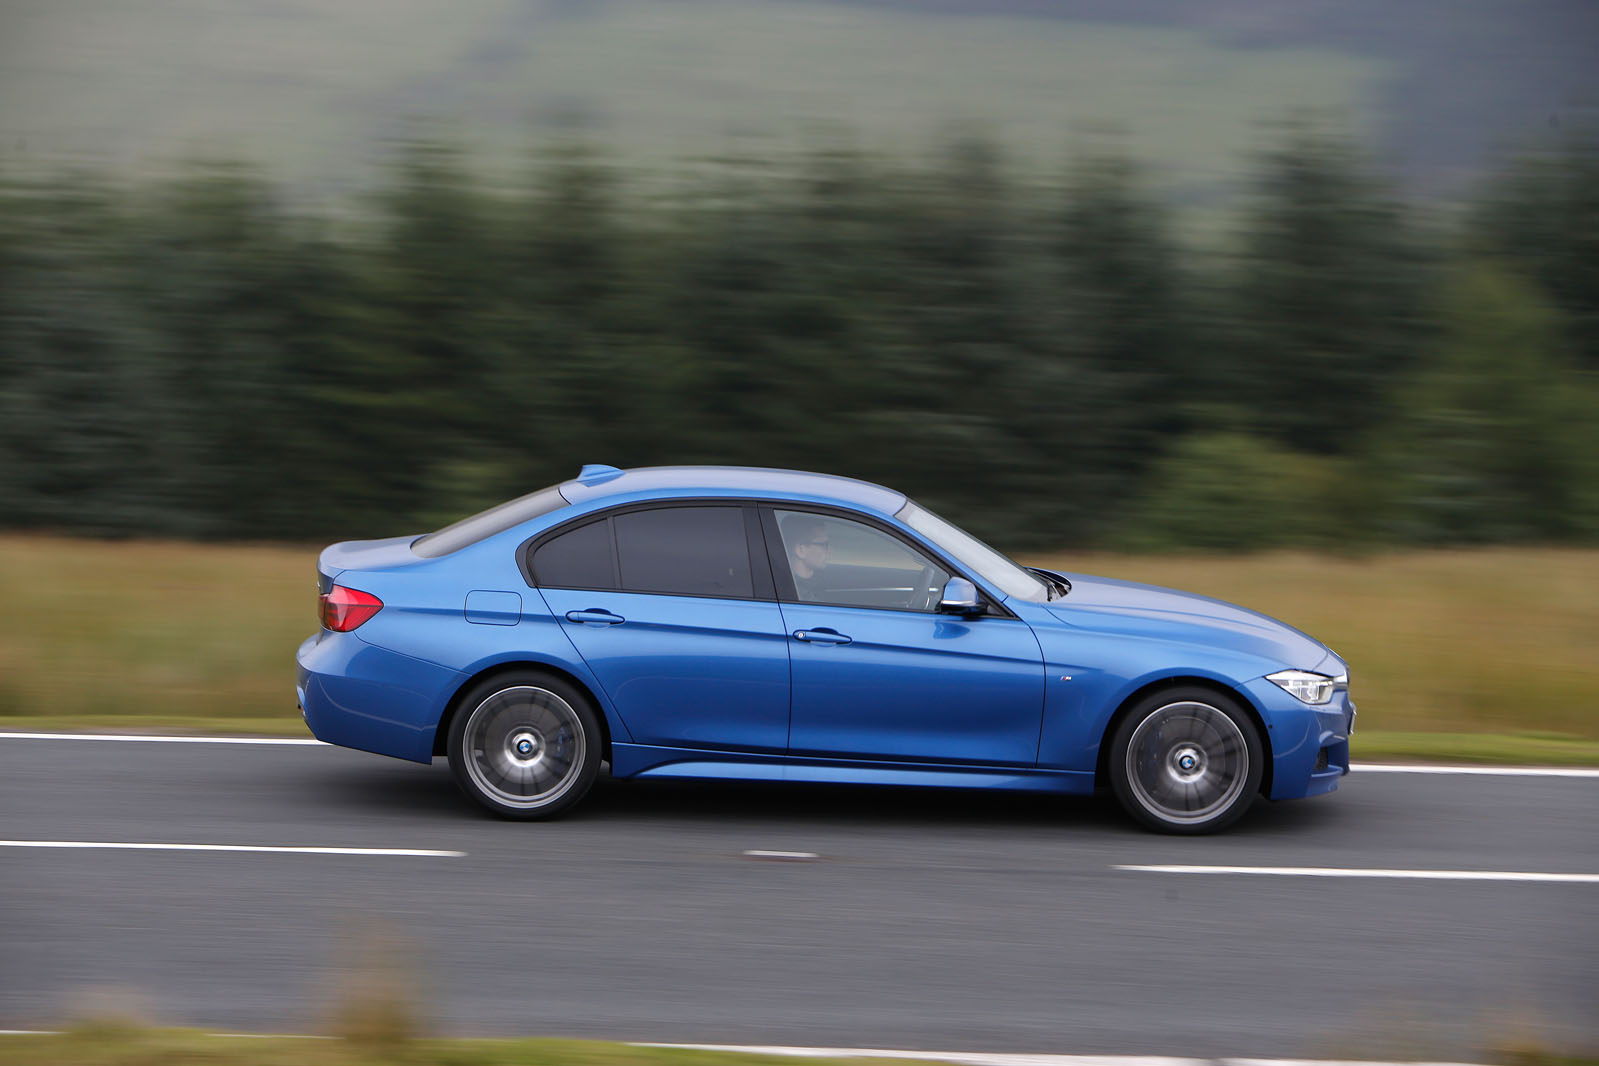 BMW 320d xDrive long-term test review: handling test Autocar